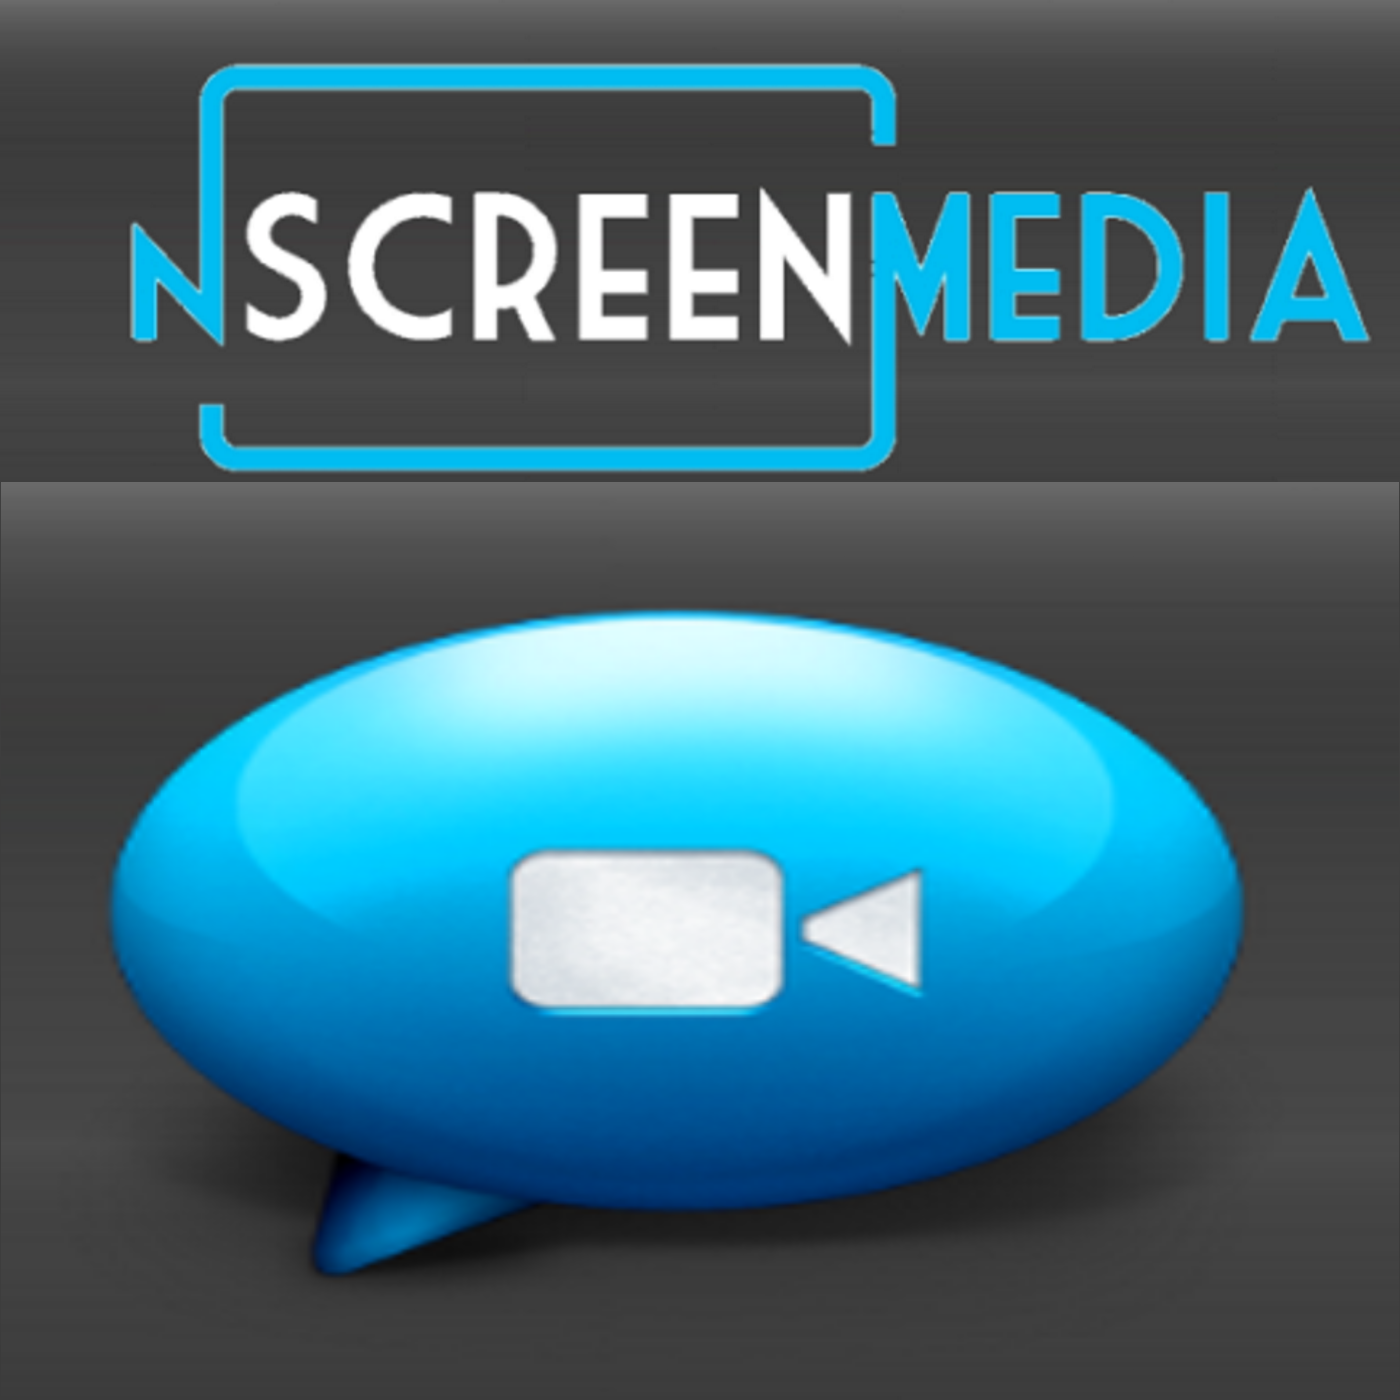 nScreenNoise - Why YouTube’s ‘shared’ tab makes sense